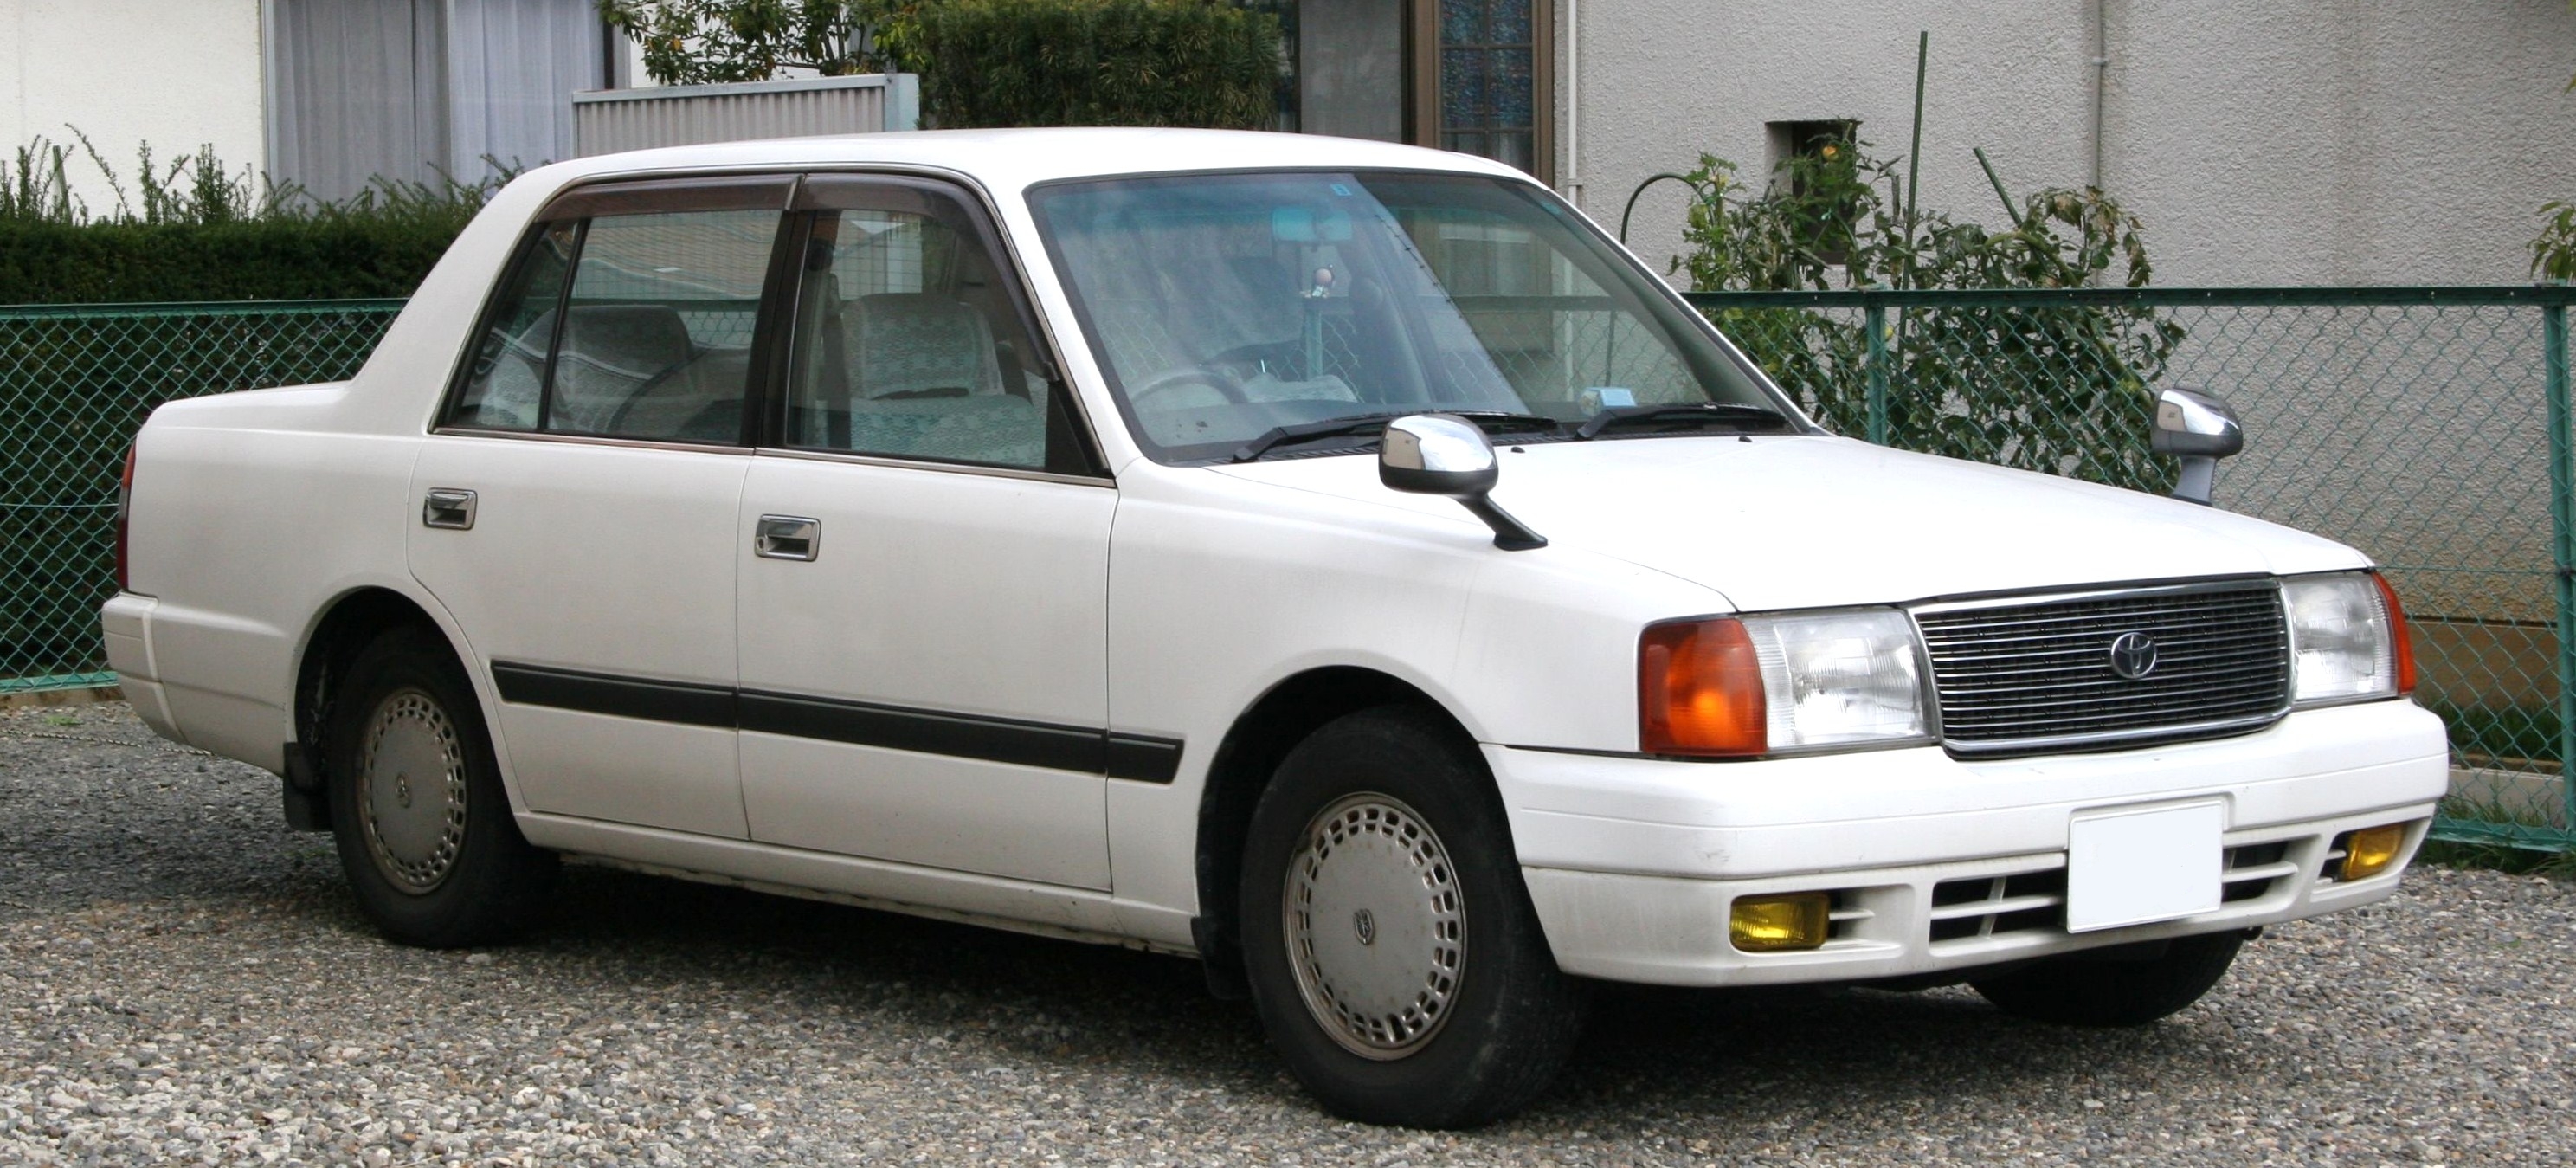 Toyota Comfort - Wikipedia